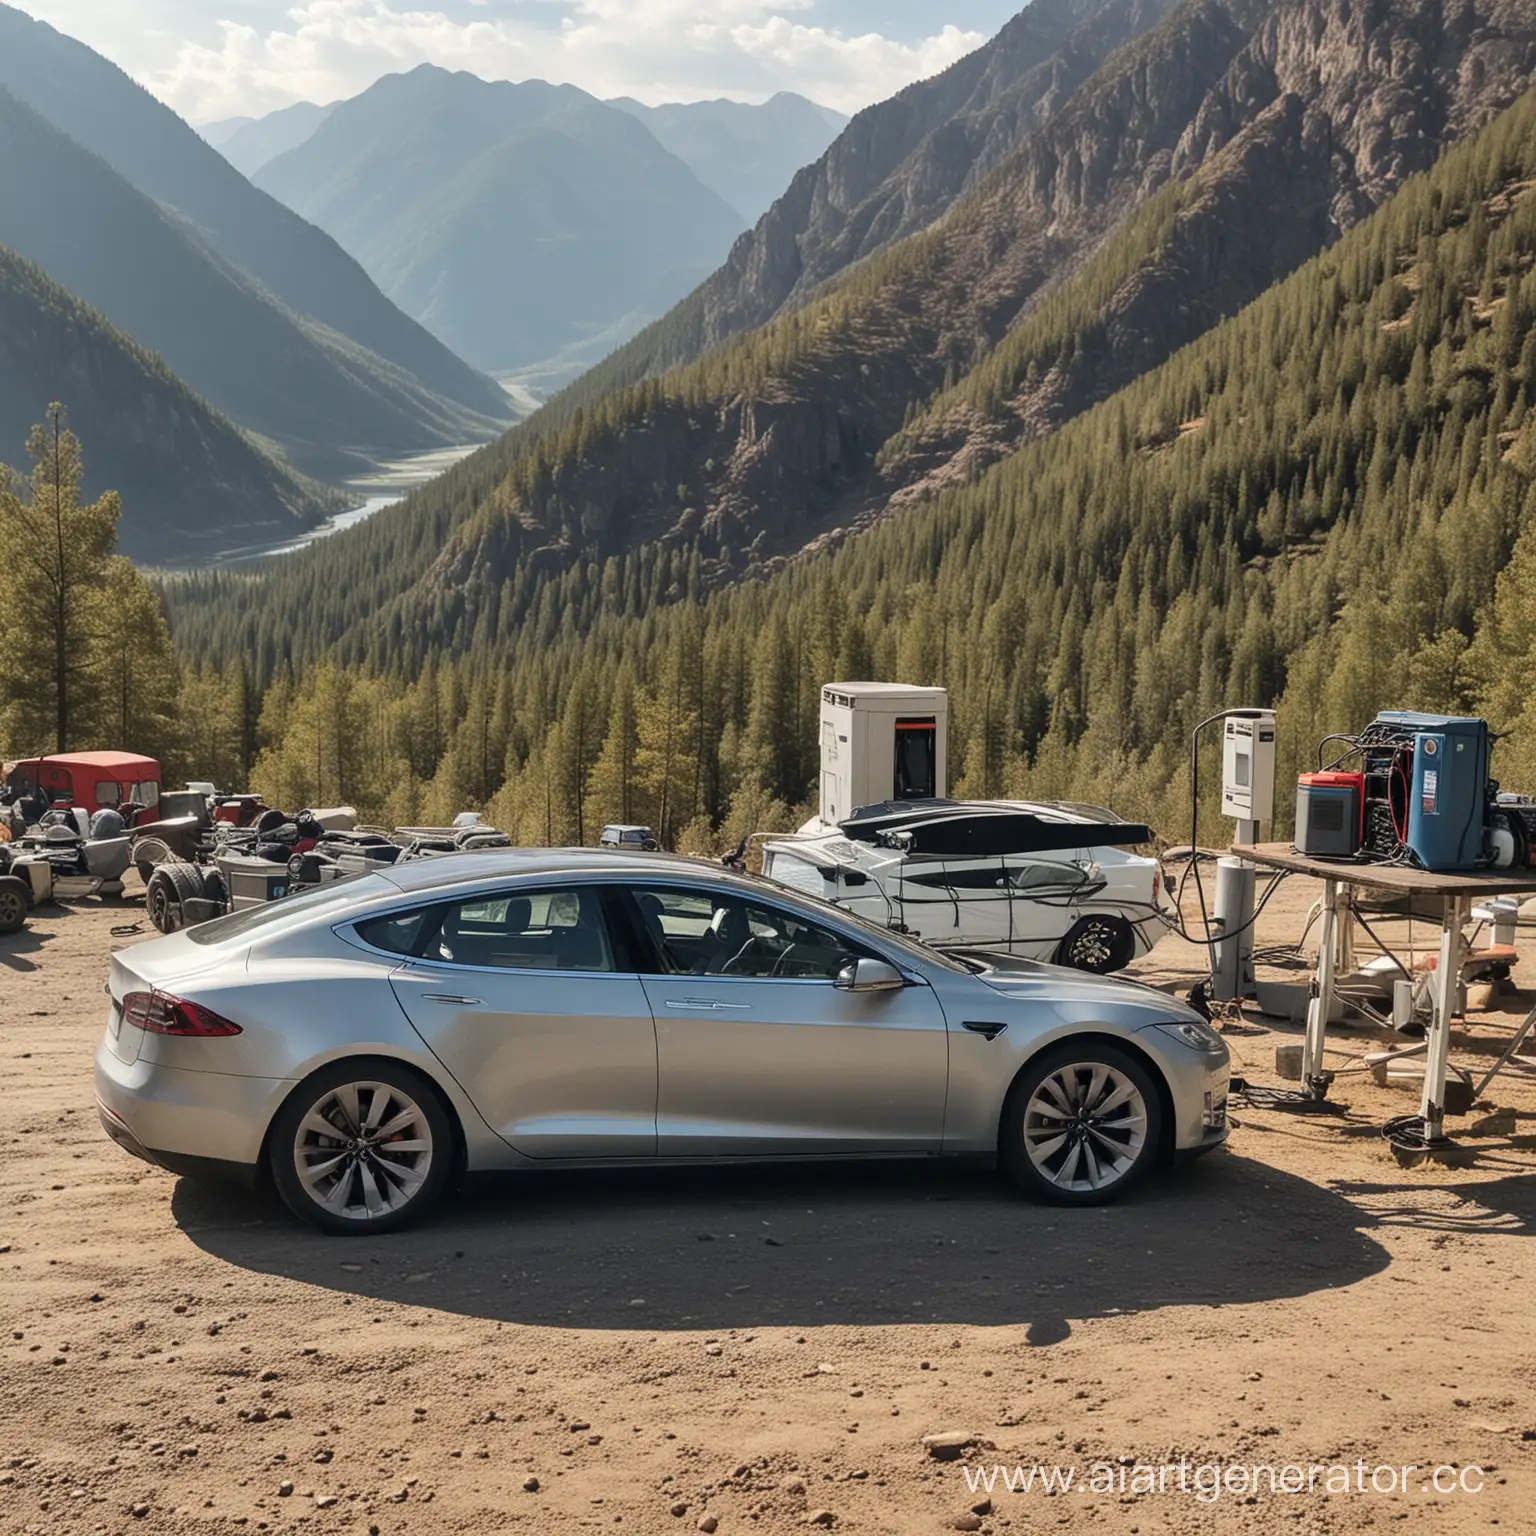 Tesla-Model-S-with-Solar-Roof-Generator-in-Pristine-Altai-Mountain-Range